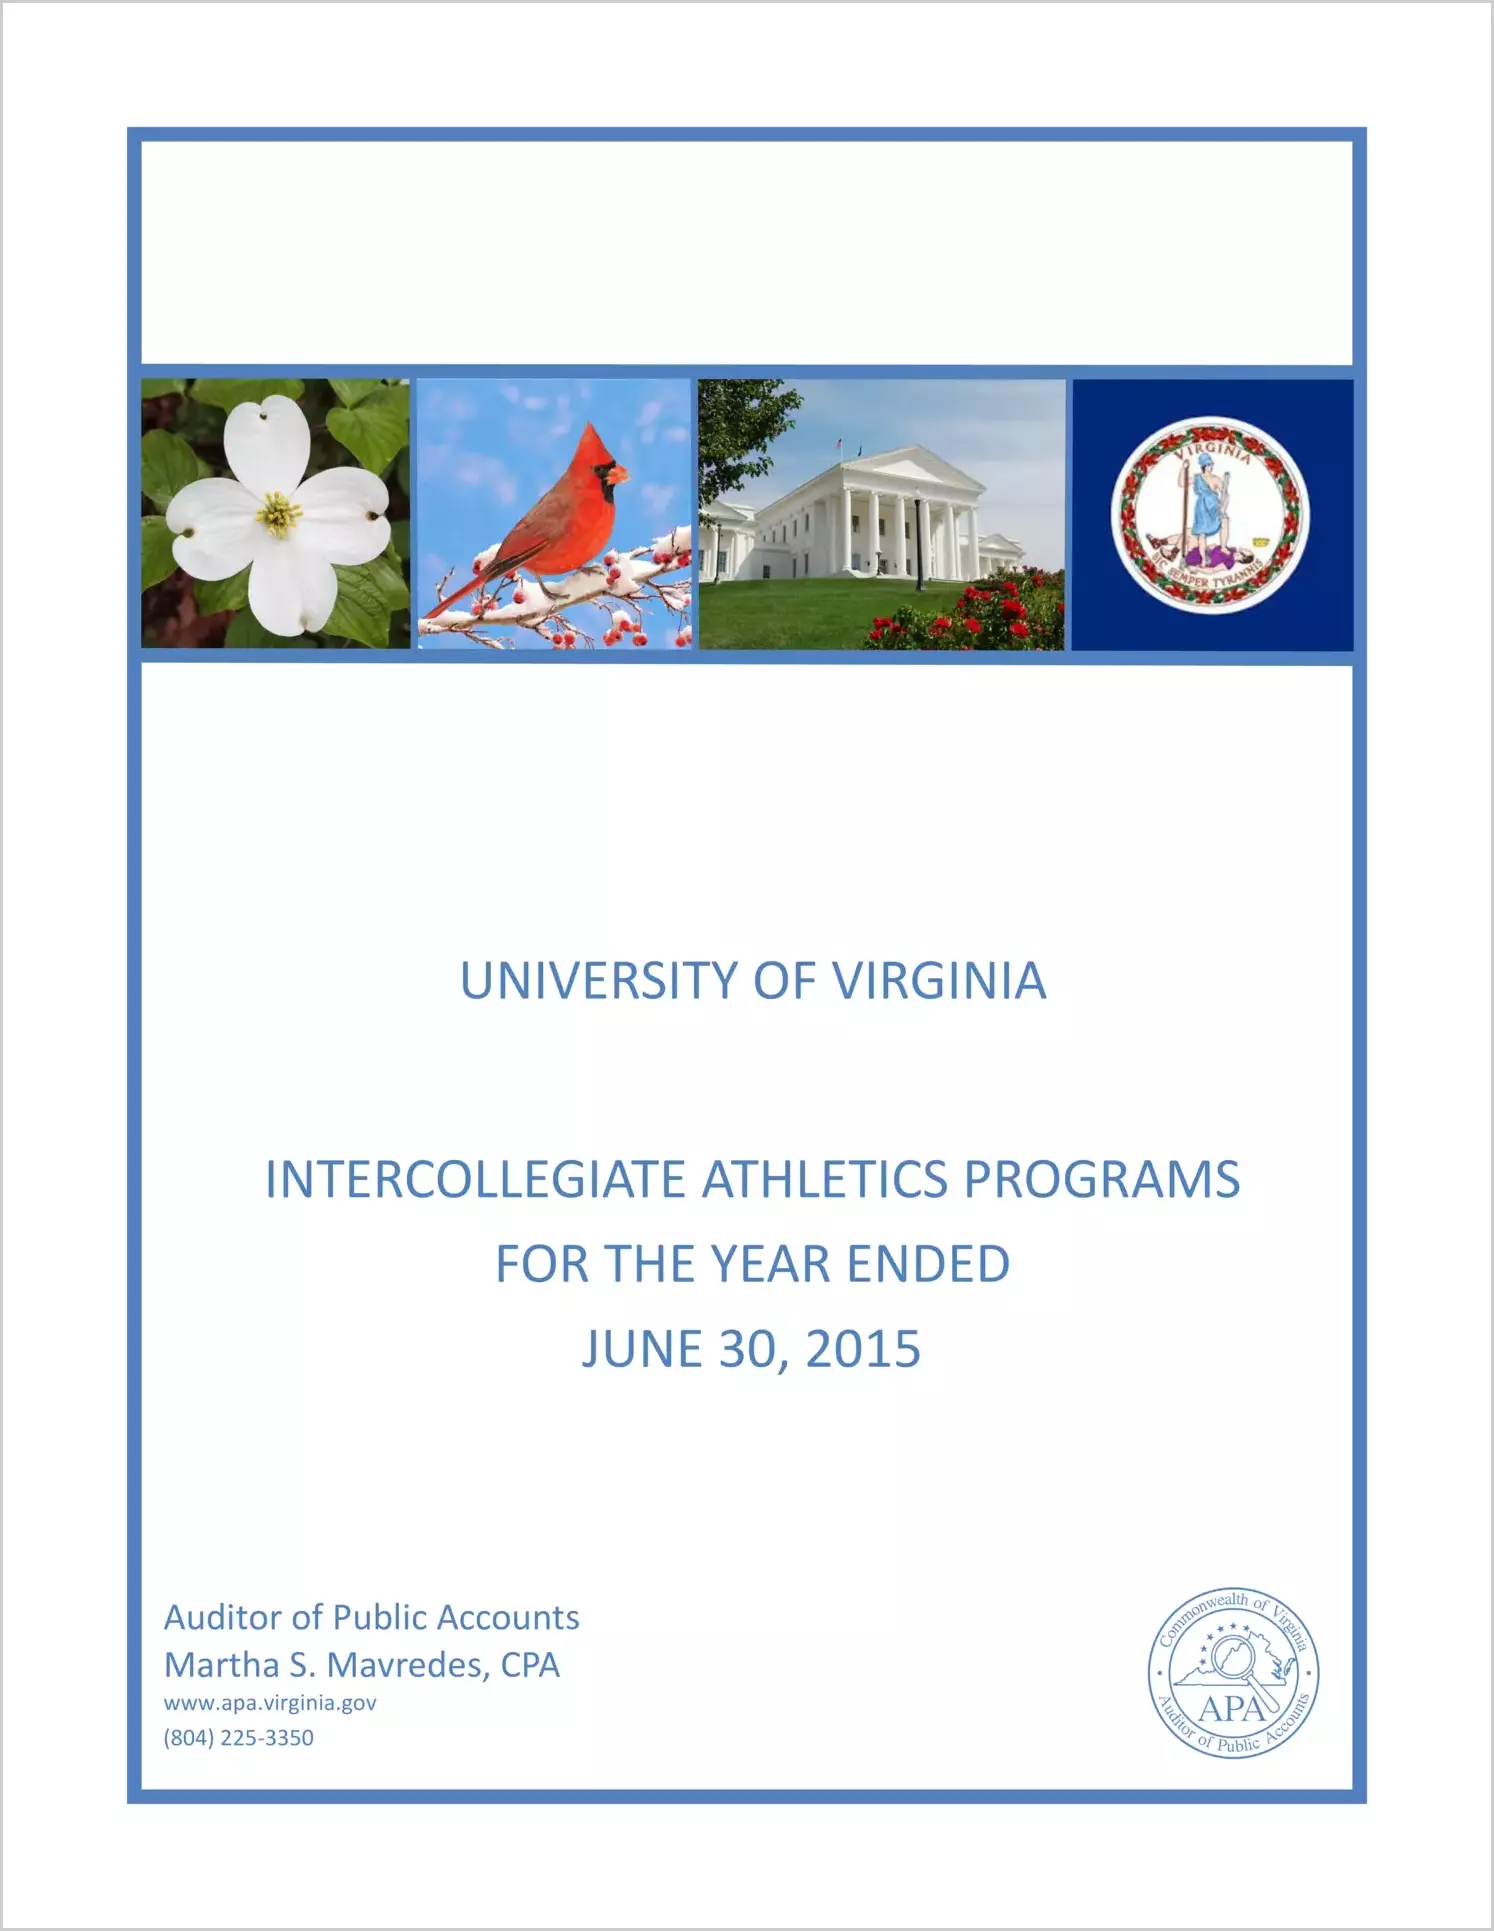 University of Virginia Intercollegiate Athletics Programs for the year ended June 30, 2015